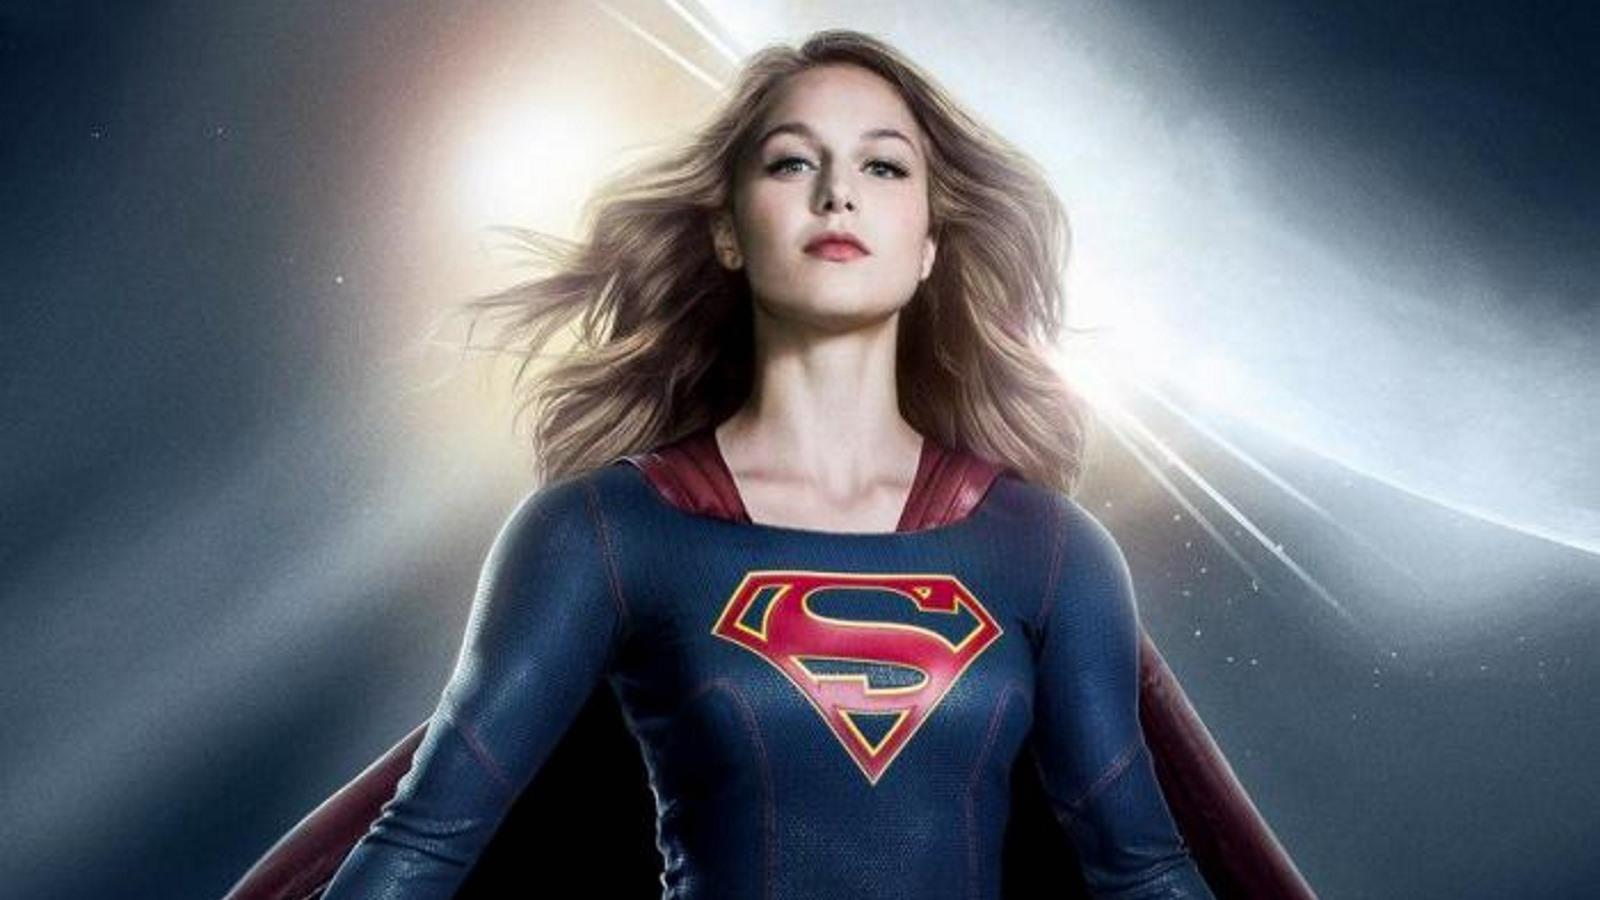 Mejores series de superheroes - Supergirl